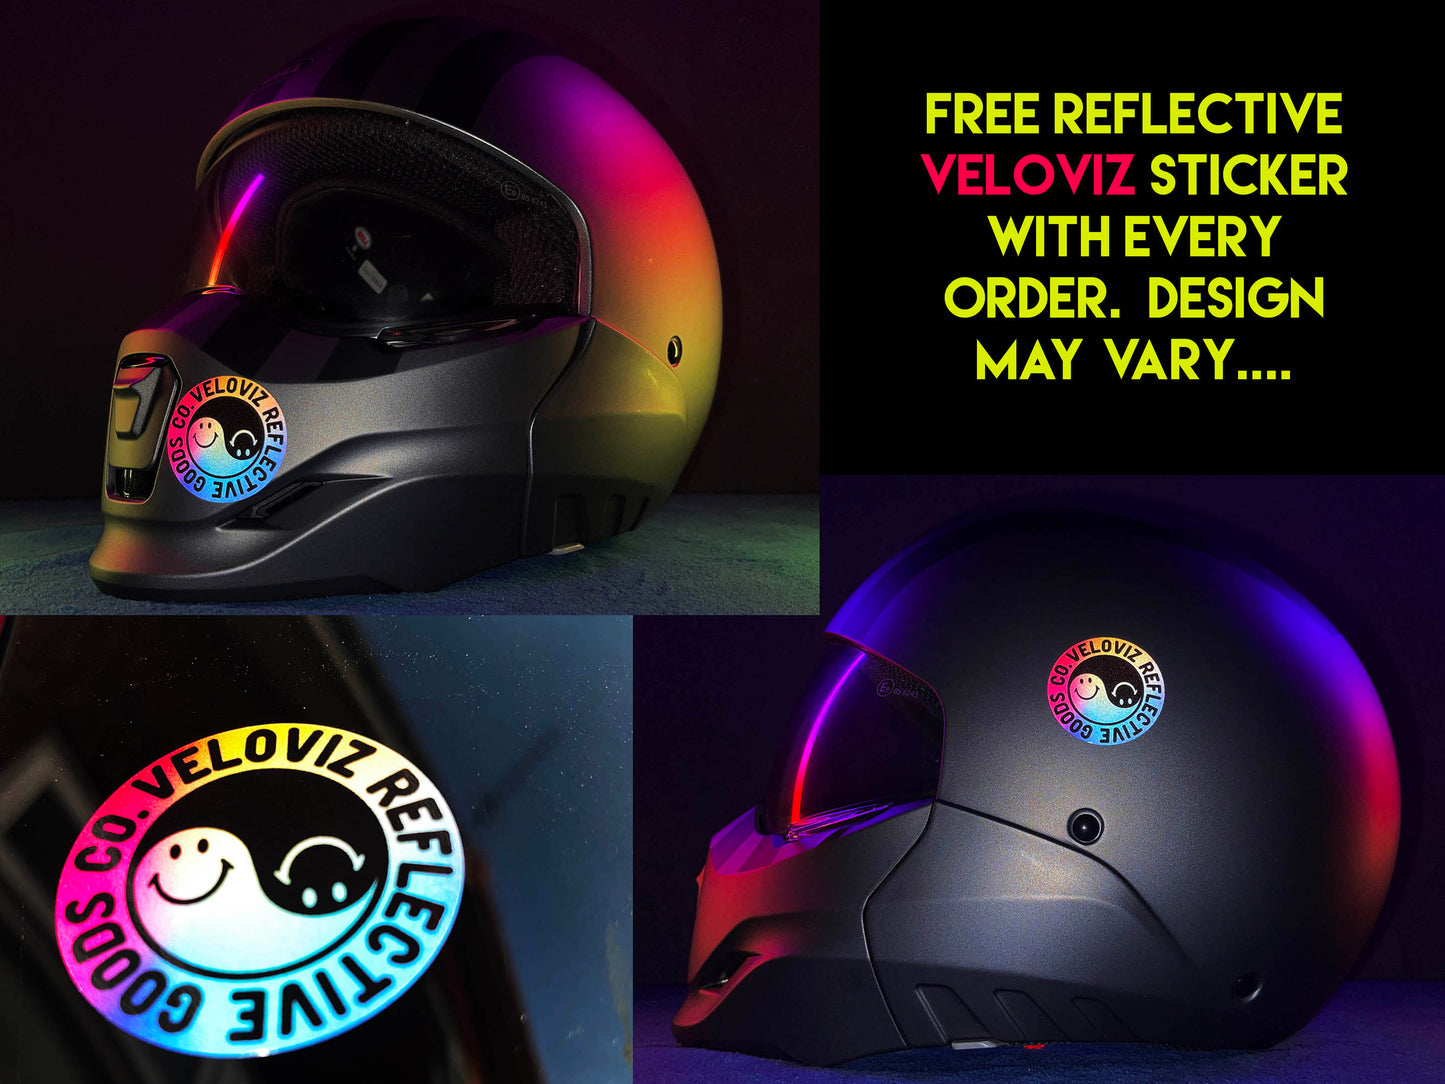 Valueviz Reflective Universal Motorcycle Pannier Chevron Stickers